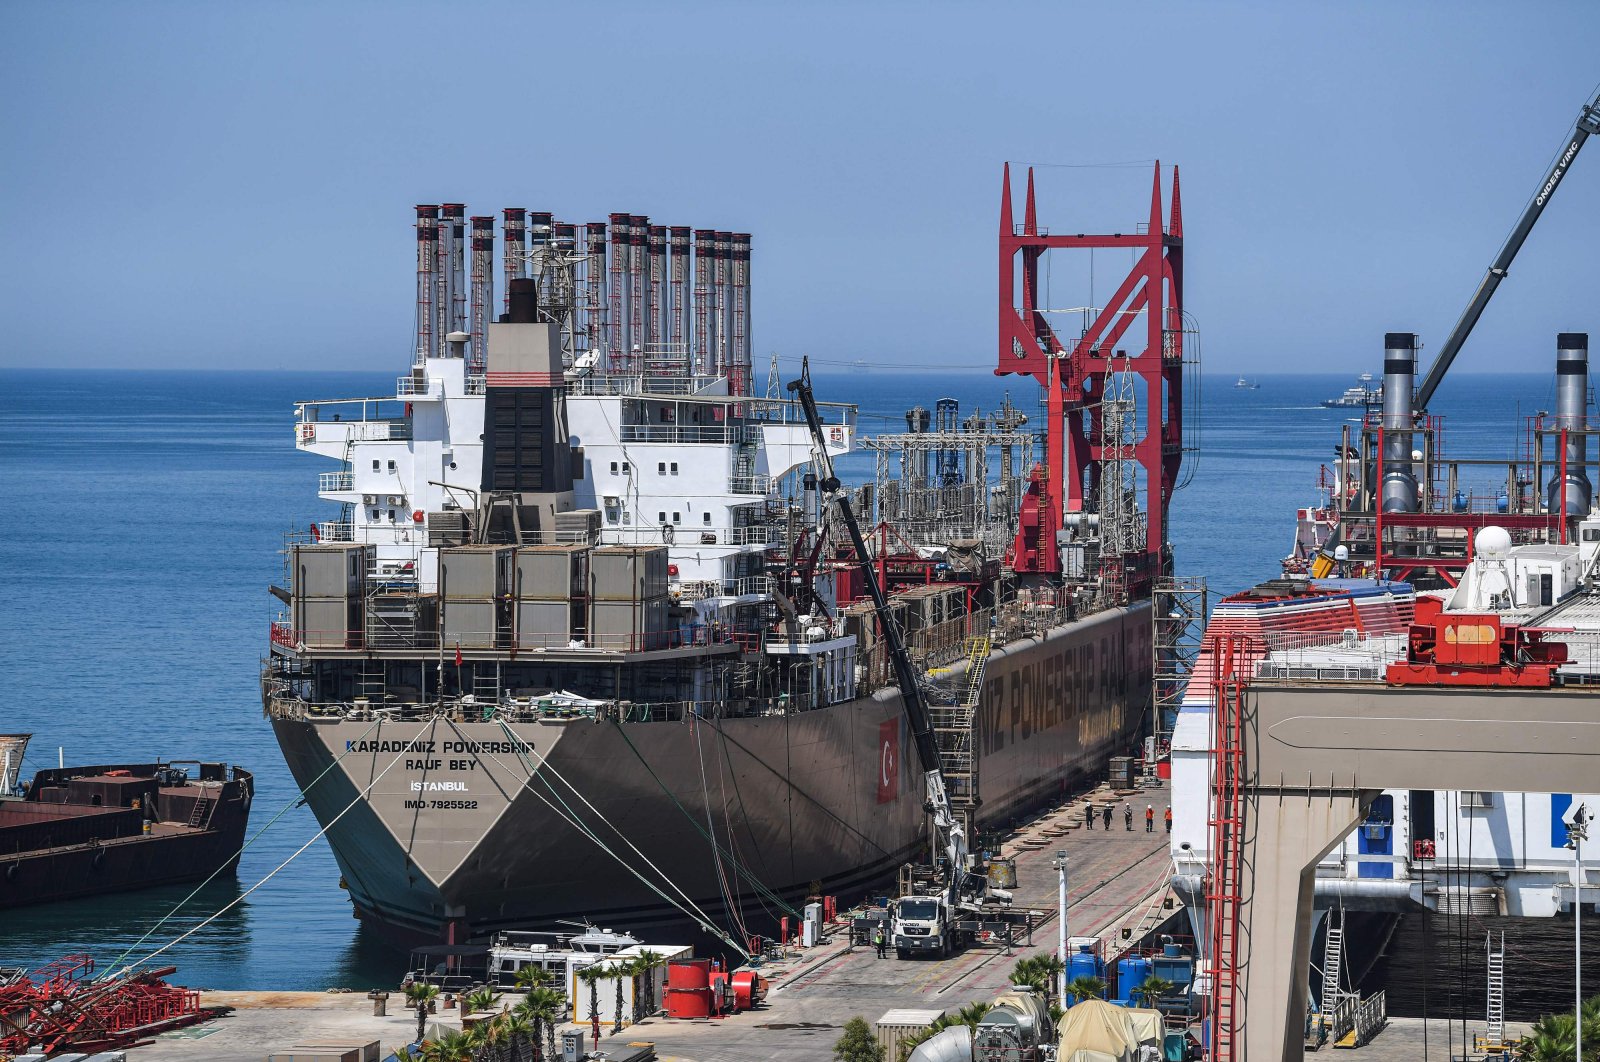 The powership Raif Bey docks in a shipyard in Yalova's Altınova district, Turkey, June 16, 2020. (AFP Photo)